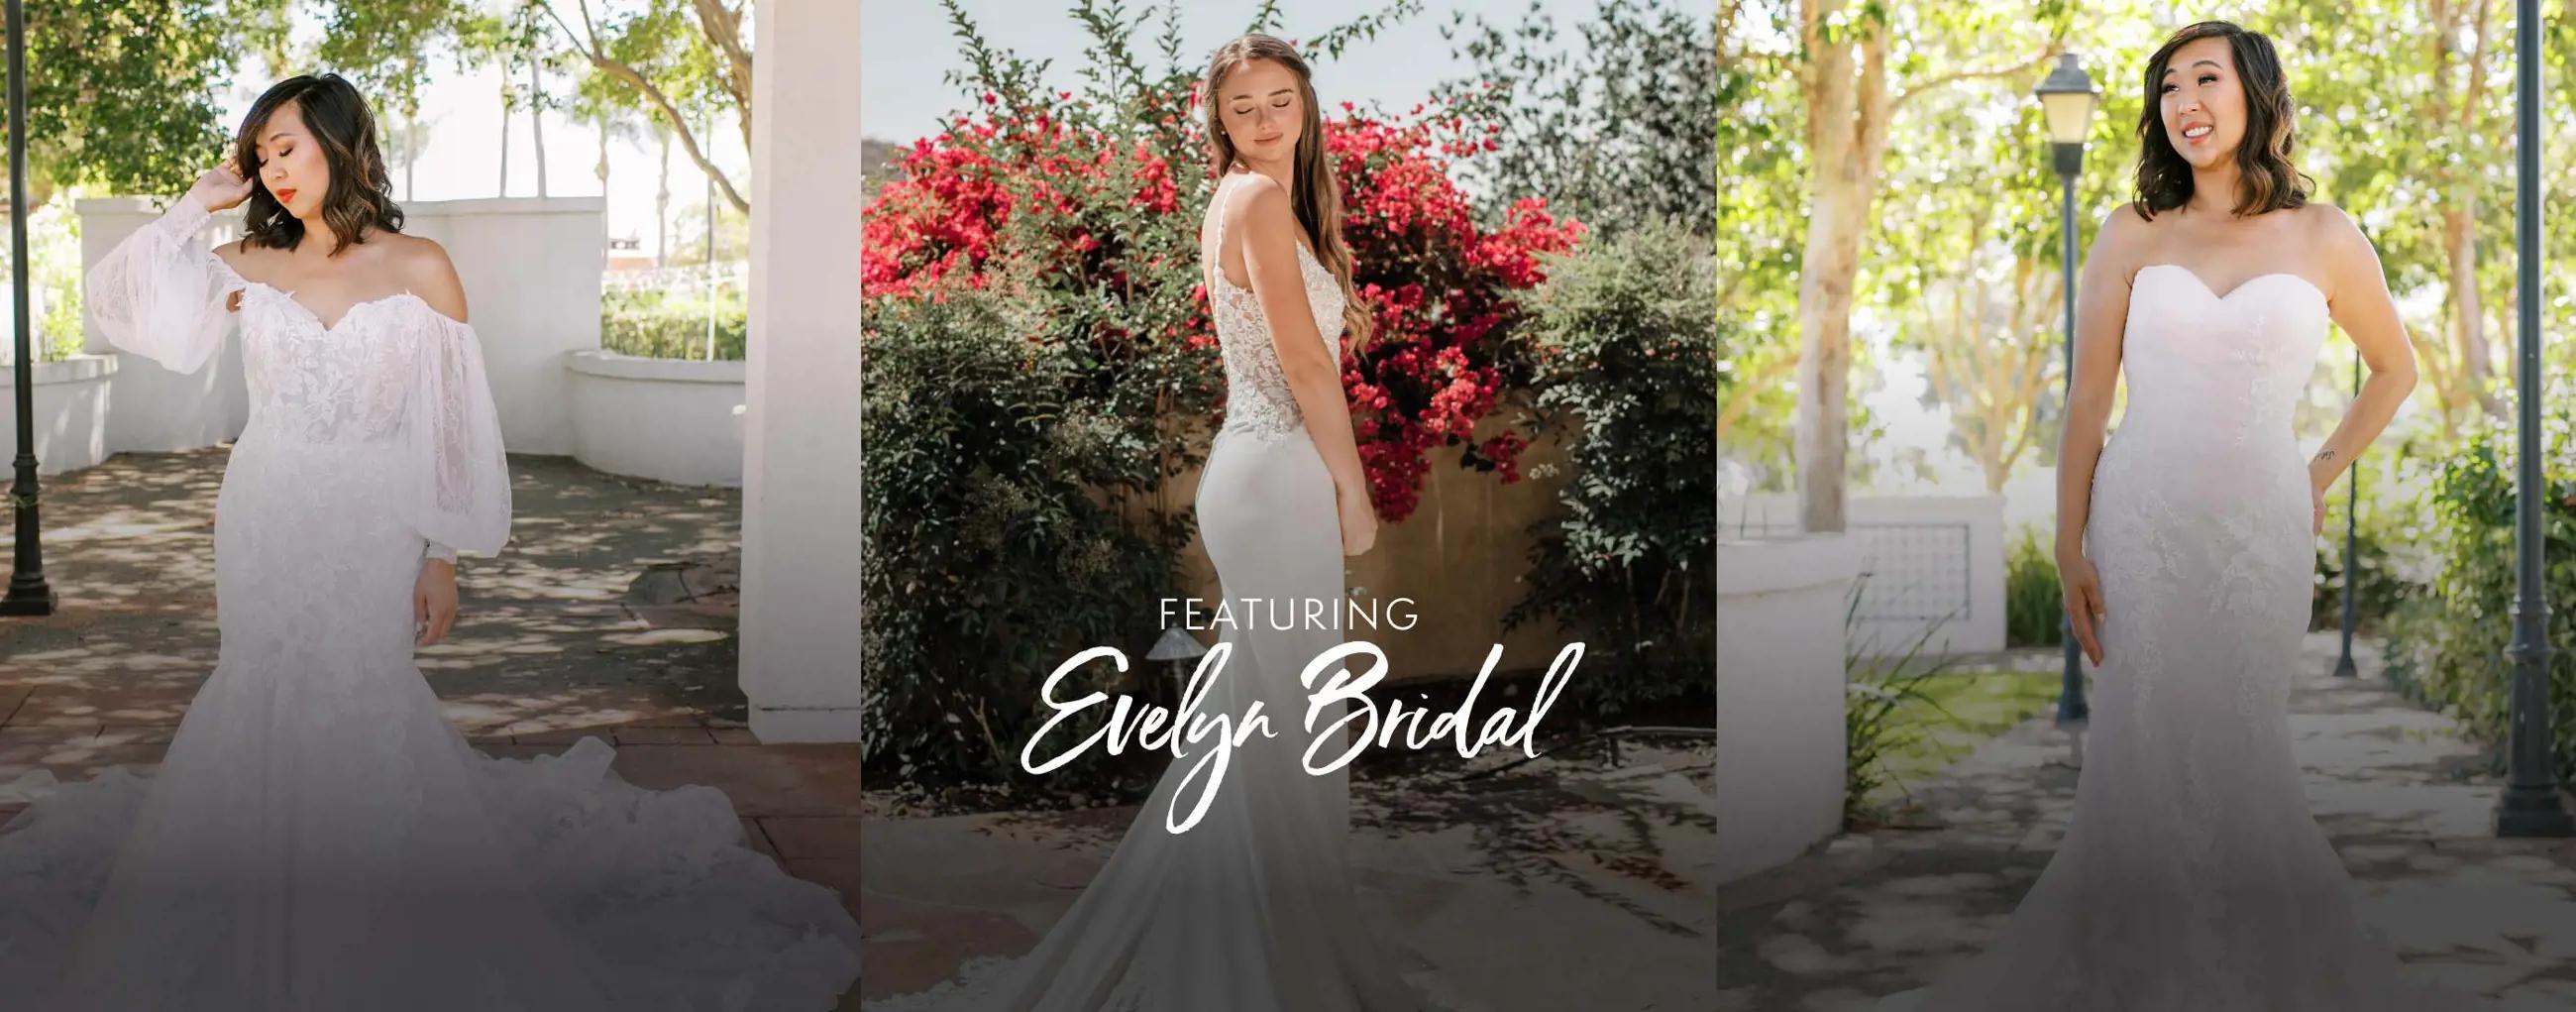 Bride in Evelyn Bridal Bridal Gown